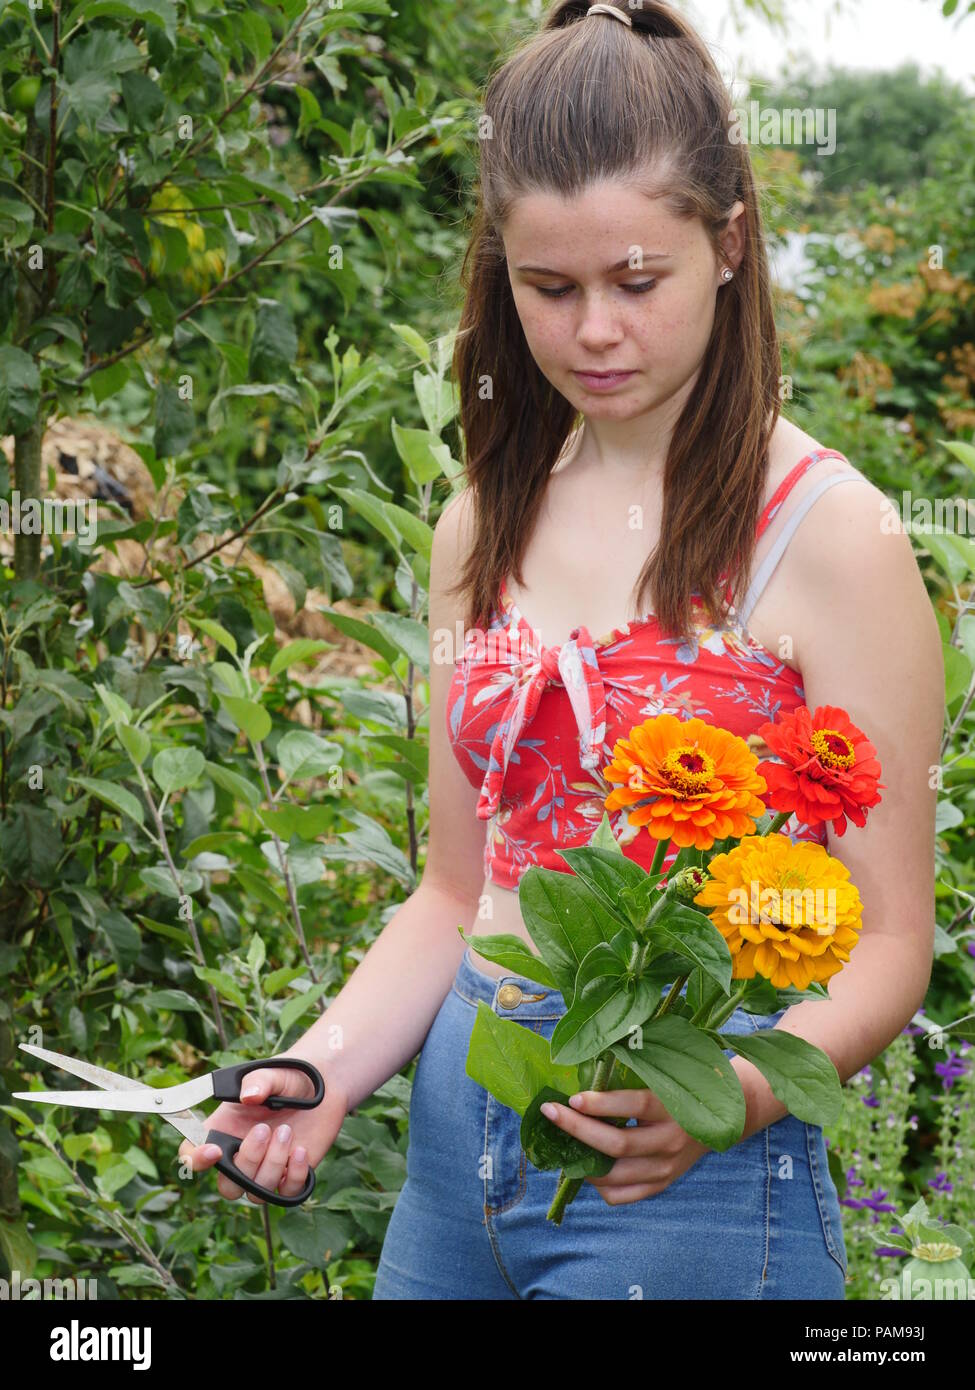 Girl cutting flowers in garden Stock Photo